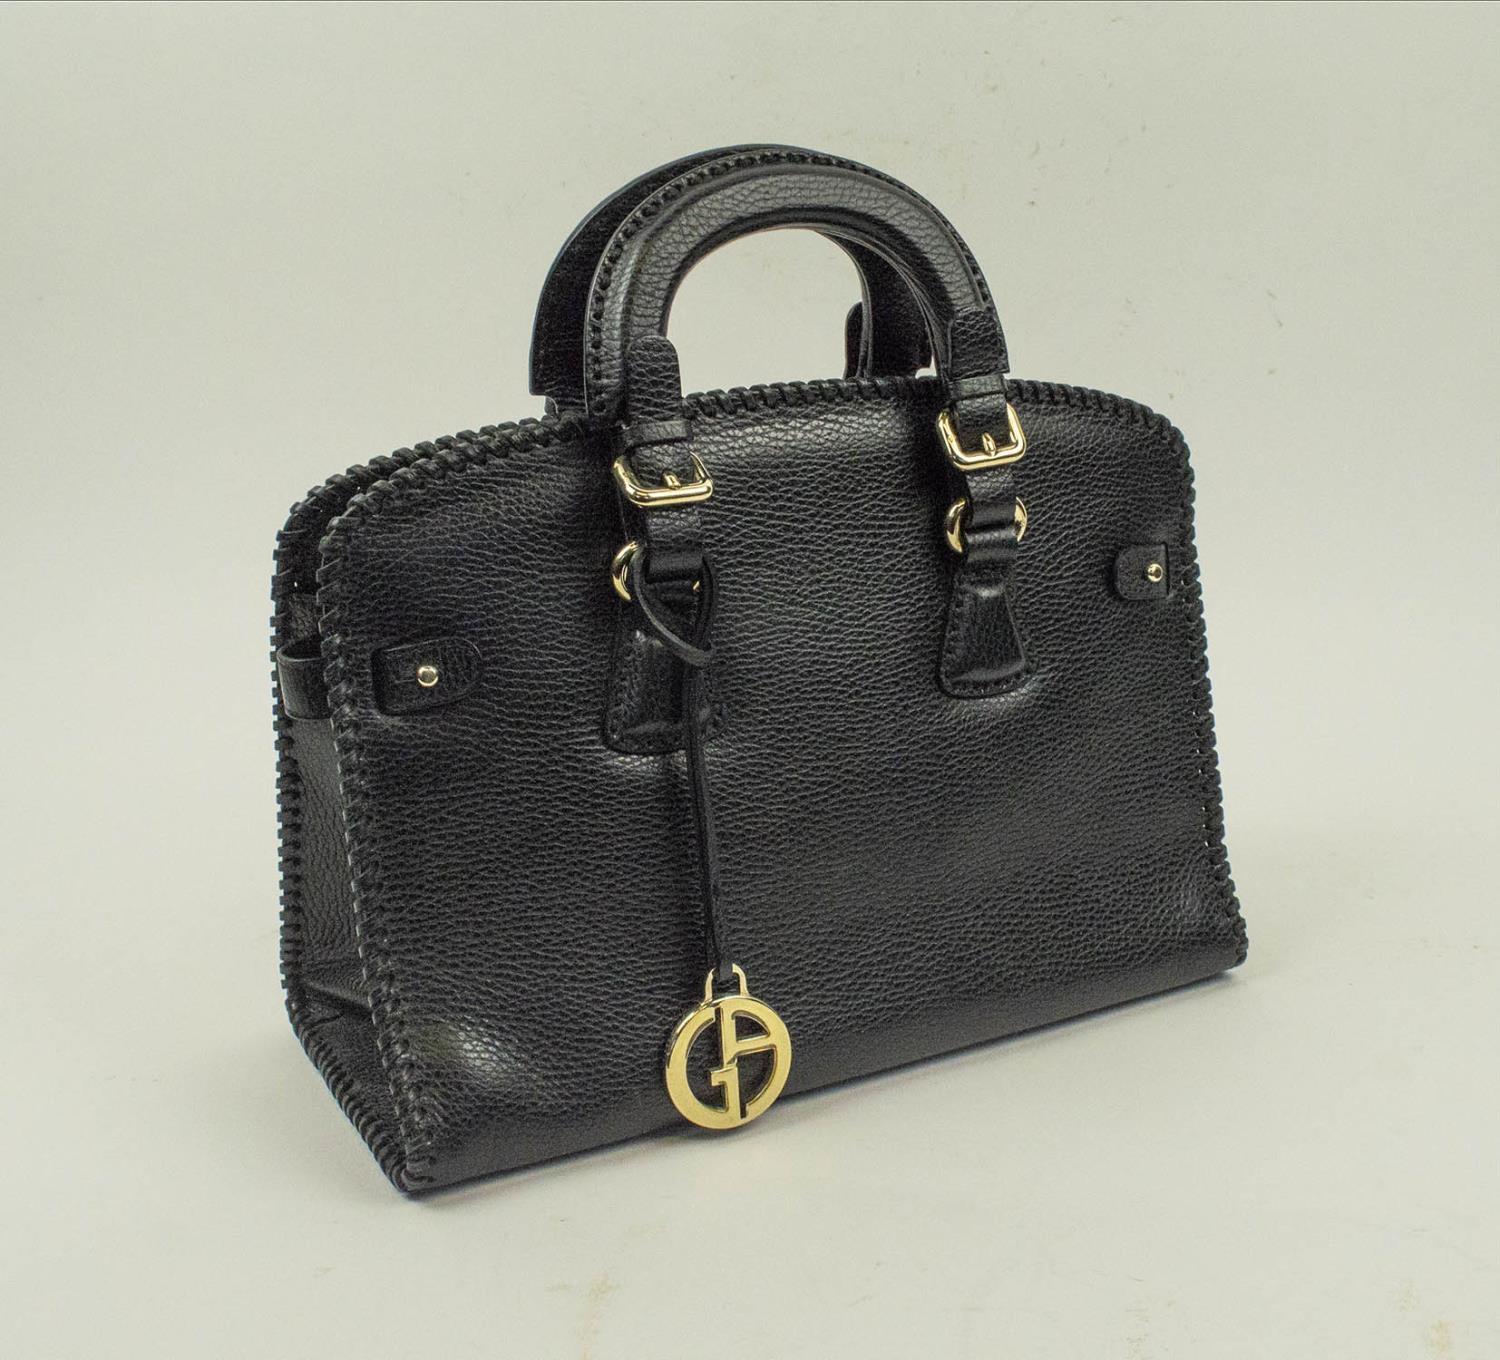 GIORGIO ARMANI HANDBAG, leather with pale gold tone hardware and logo charm, two top handles, bottom